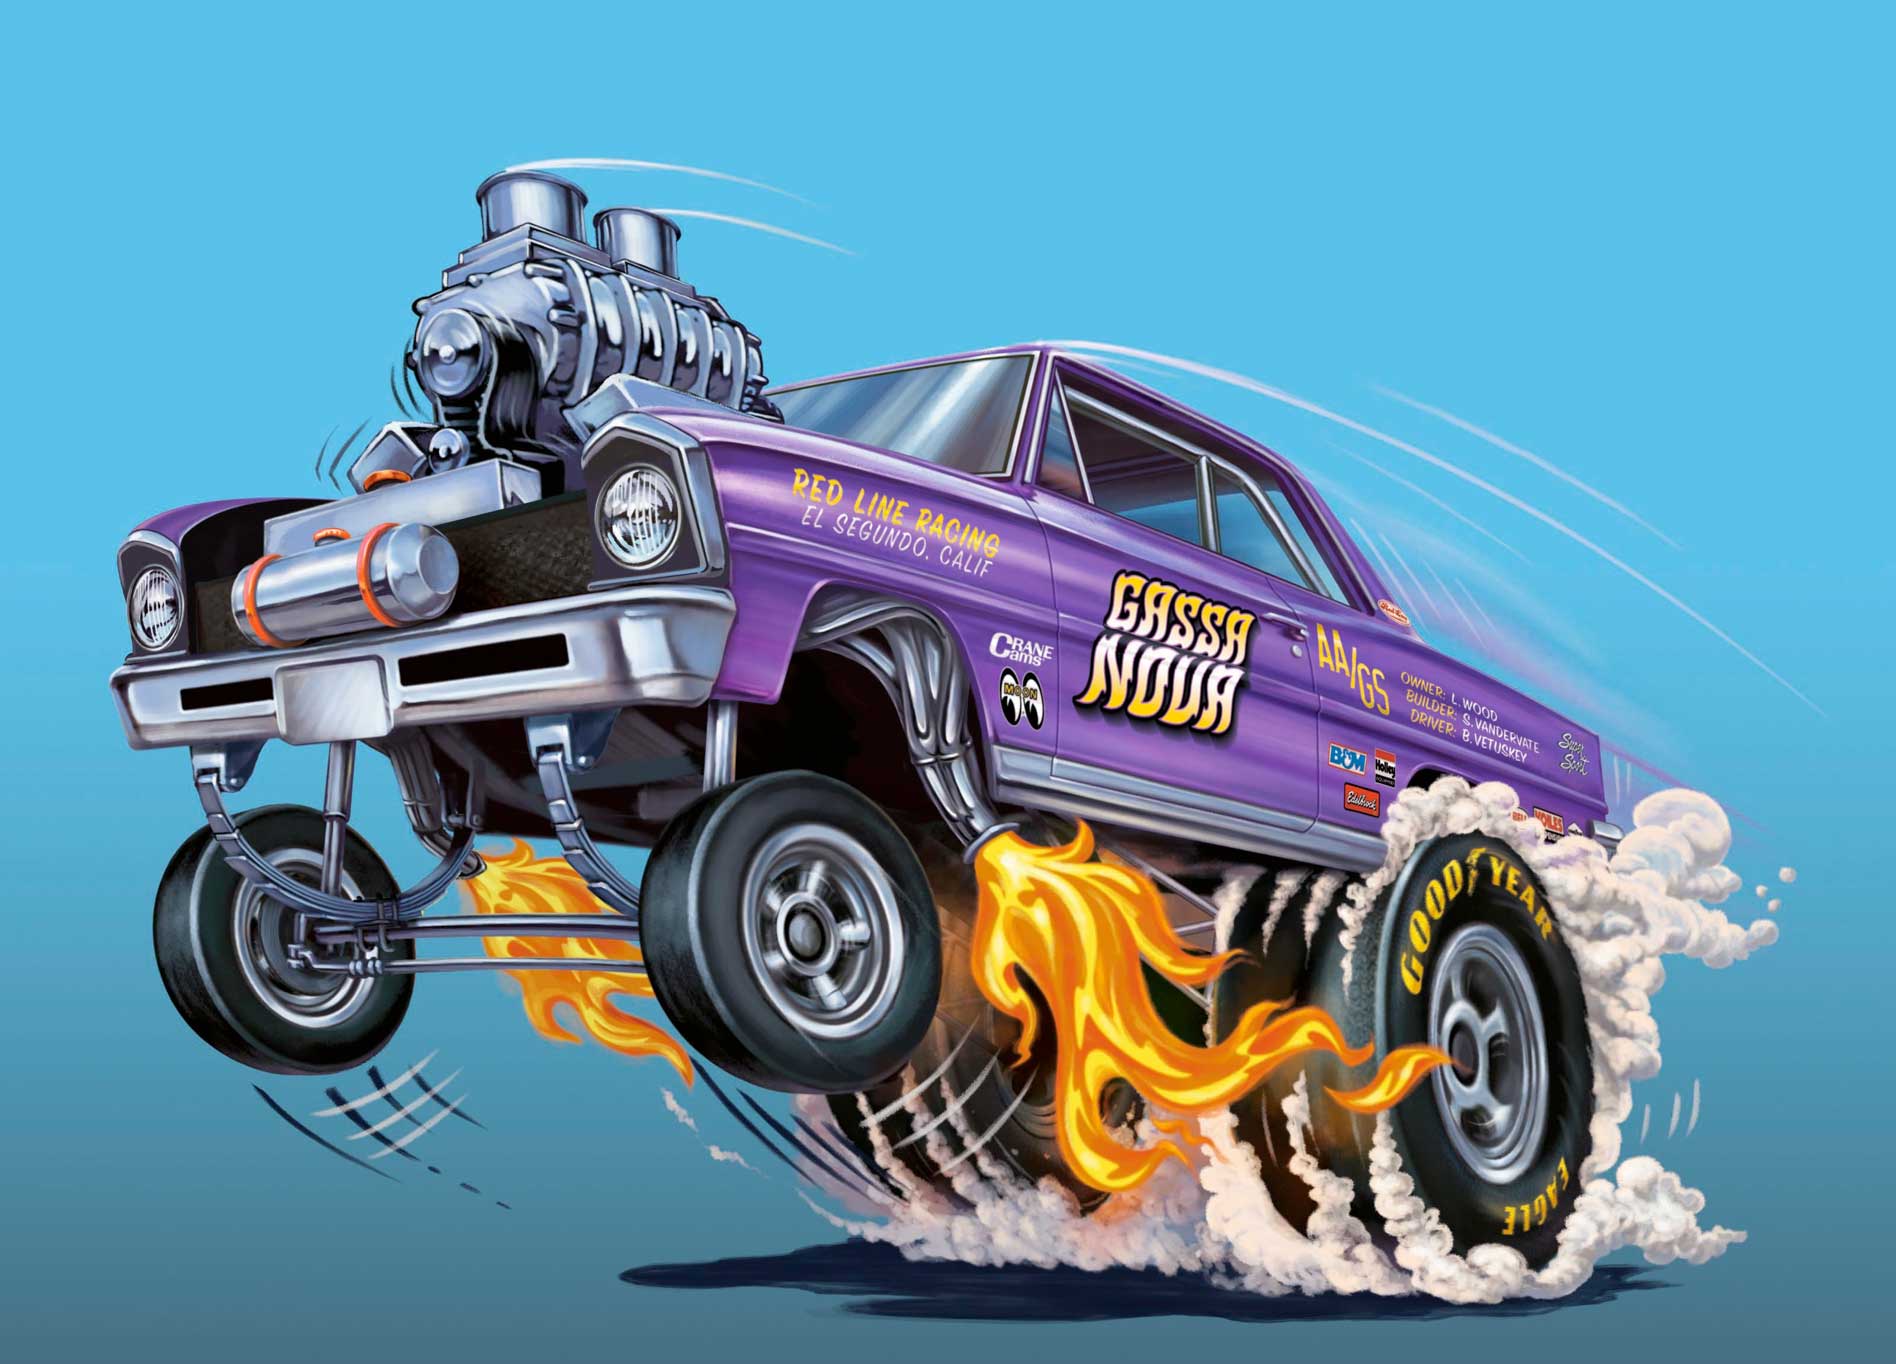 Ray Goudey Illustration gassa nova purple car